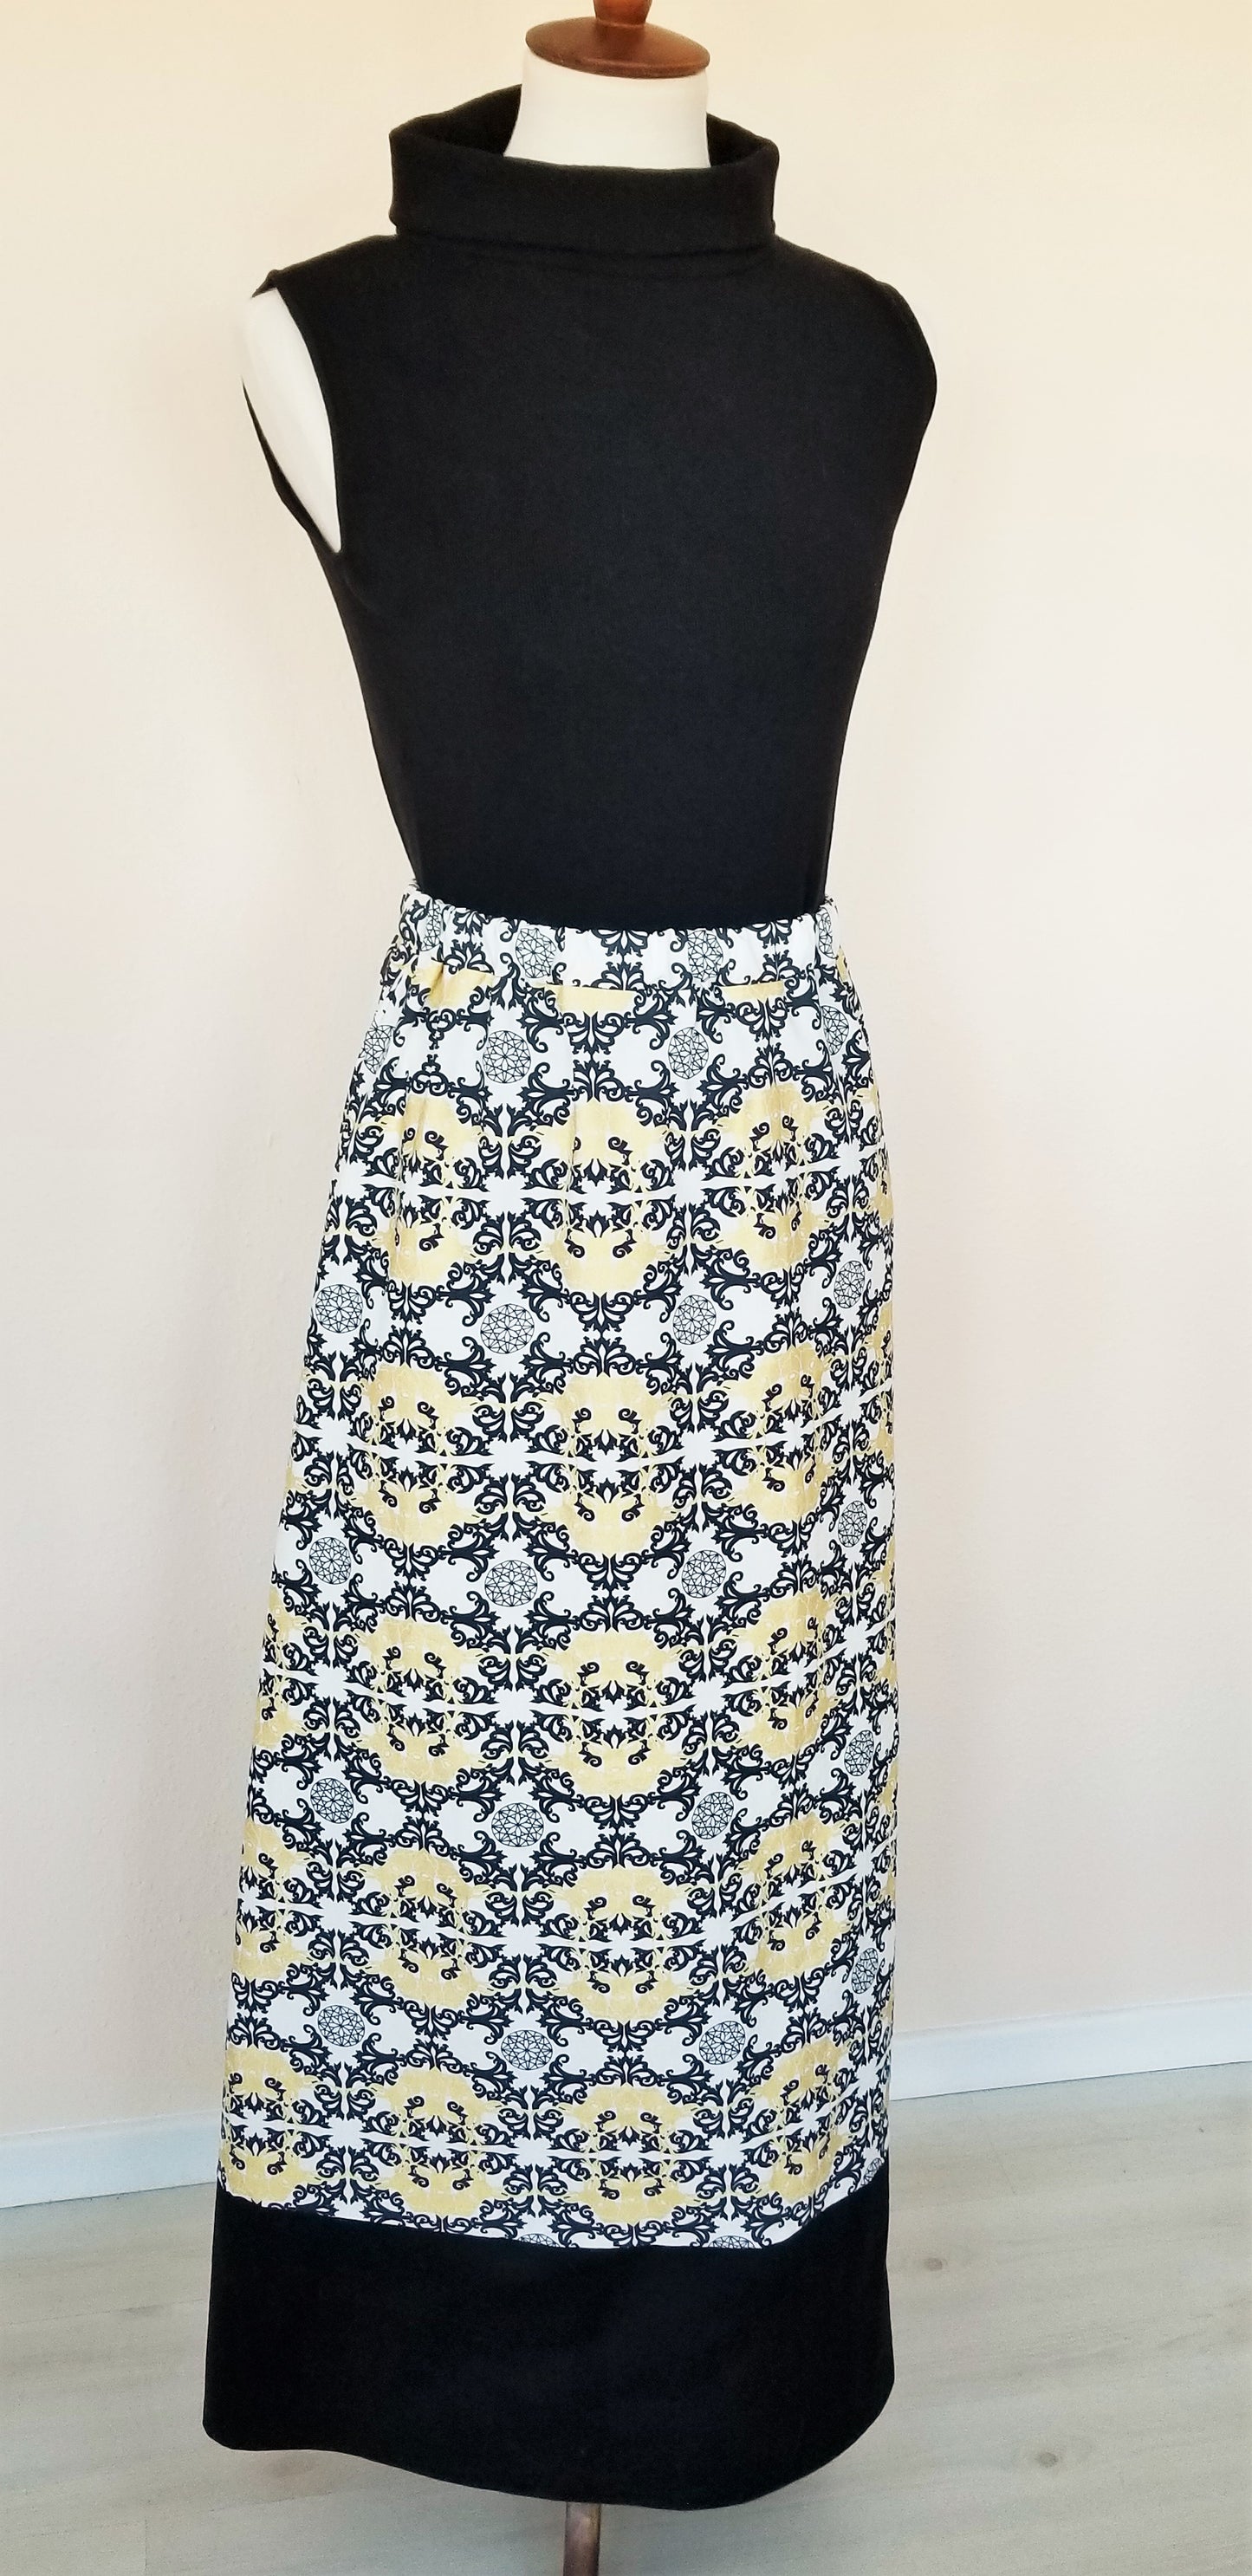 Organic Cotton Women's Skirt in Black, Cream and Metallic Gold